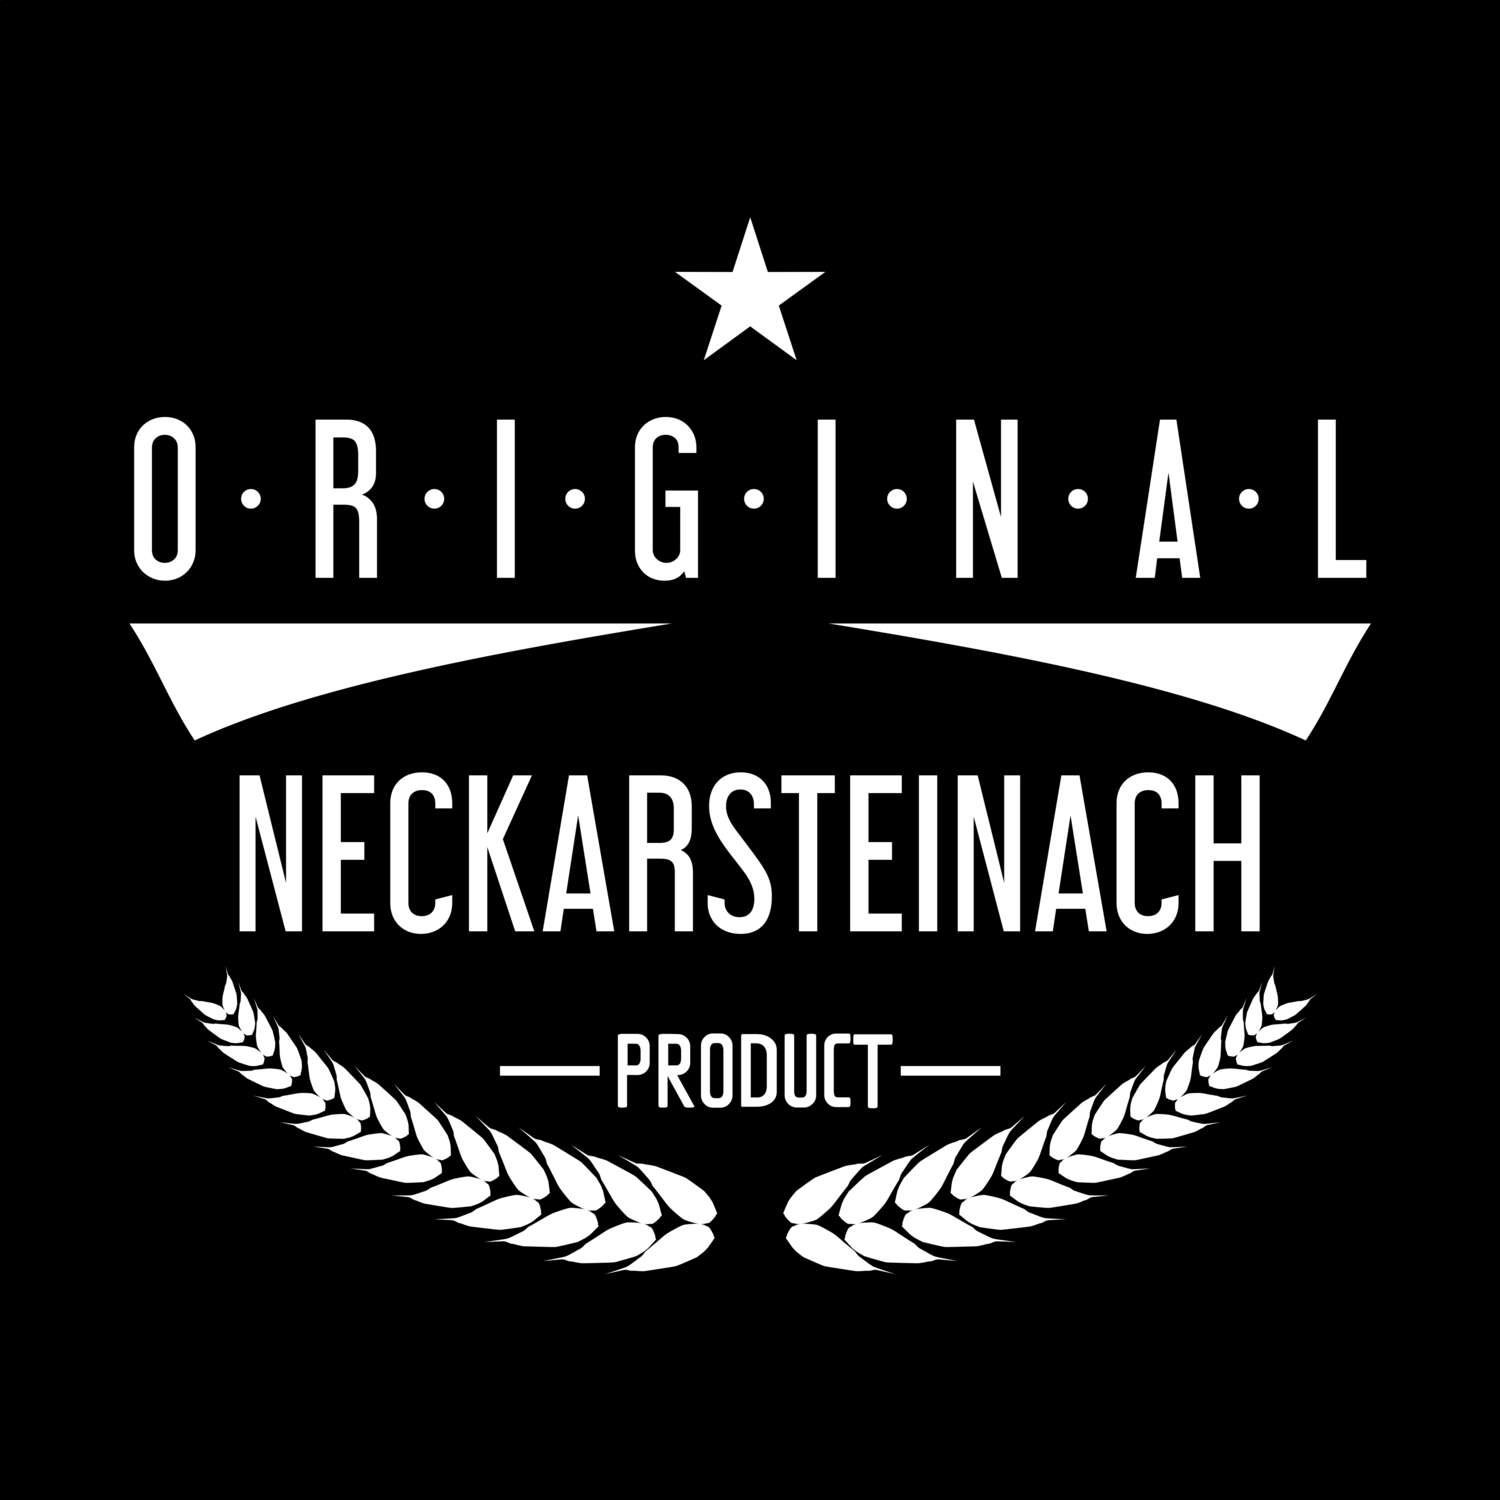 Neckarsteinach T-Shirt »Original Product«